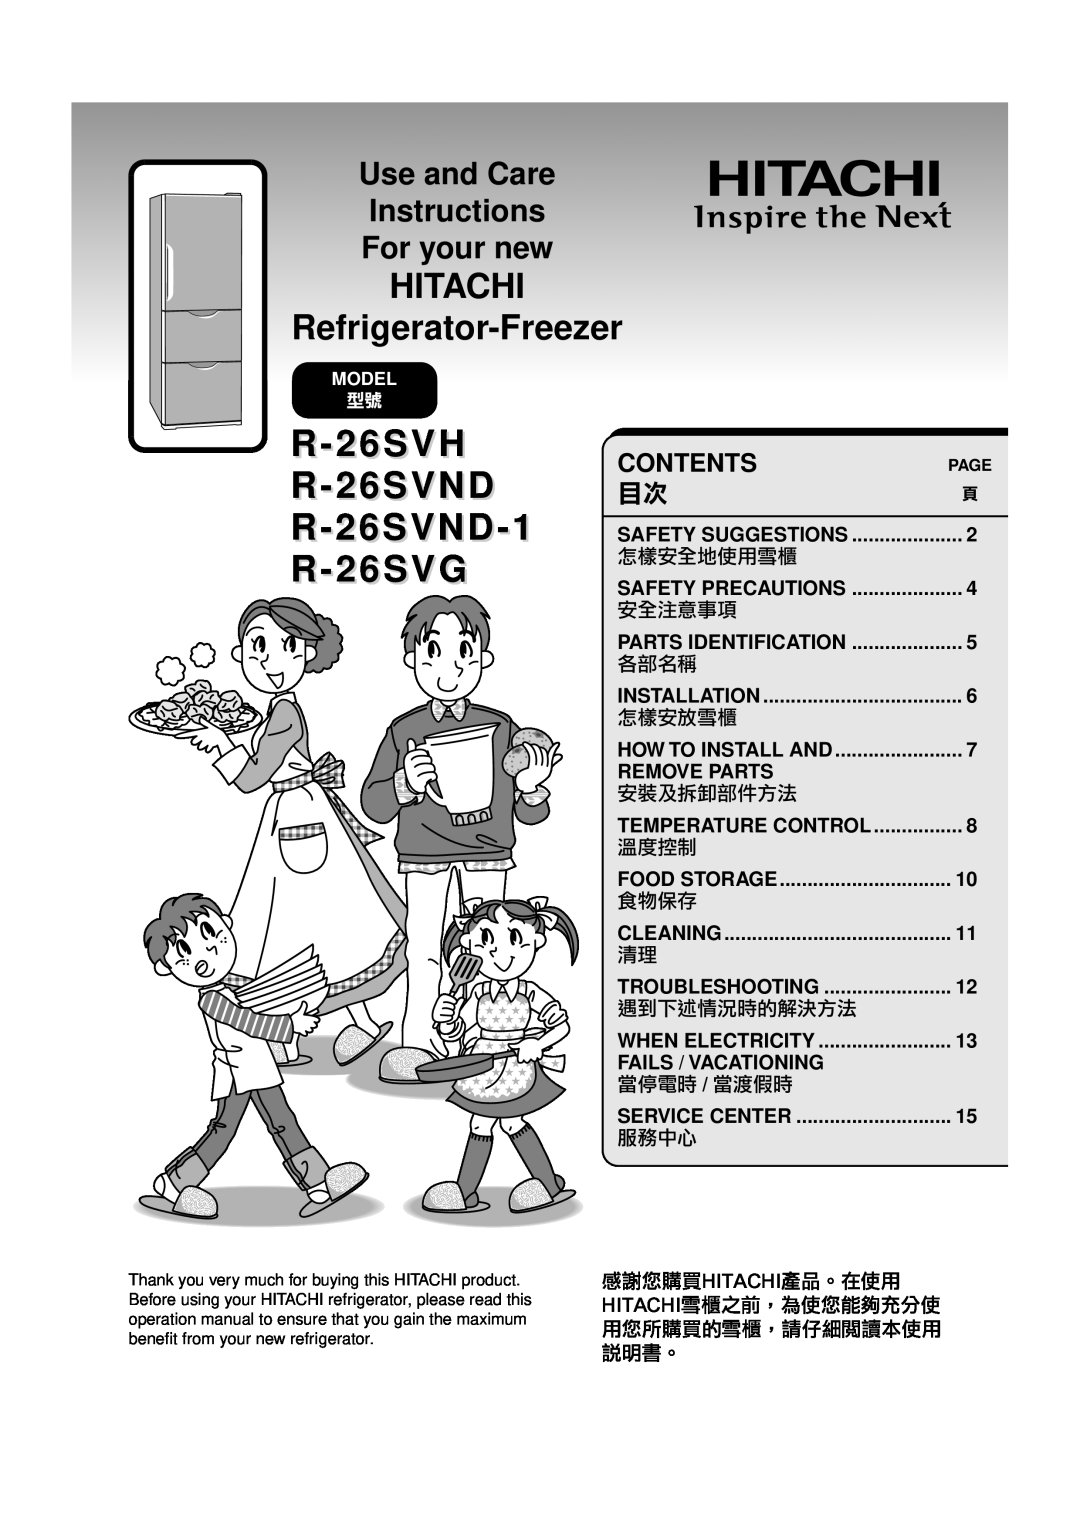 Hitachi operation manual R-26SVH R-26SVND R-26SVND-1 R-26SVG, HITACHI Refrigerator-Freezer, Contents, 怎樣安全地使用雪櫃, 安全注意事項 